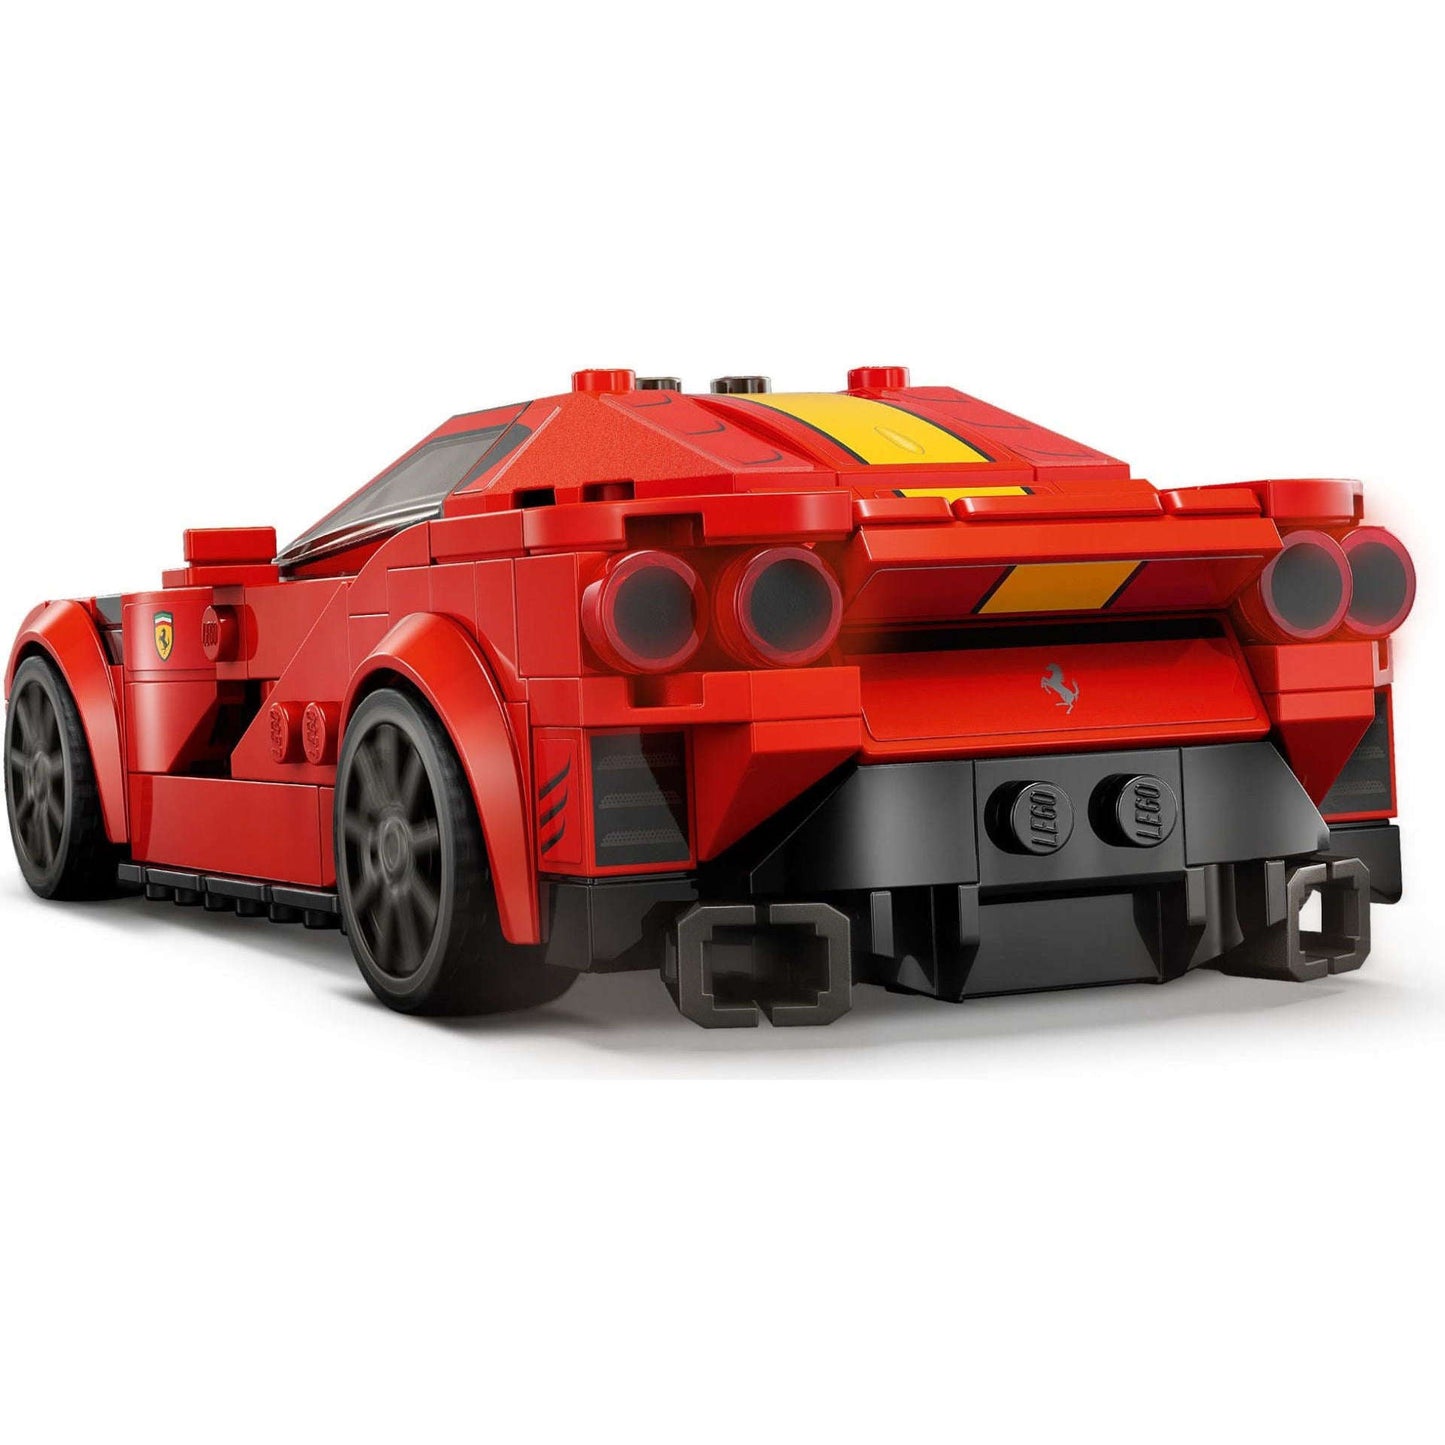 Toys N Tuck:Lego 76914 Speed Champions Ferrari 812 Competizione,Lego Speed Champions